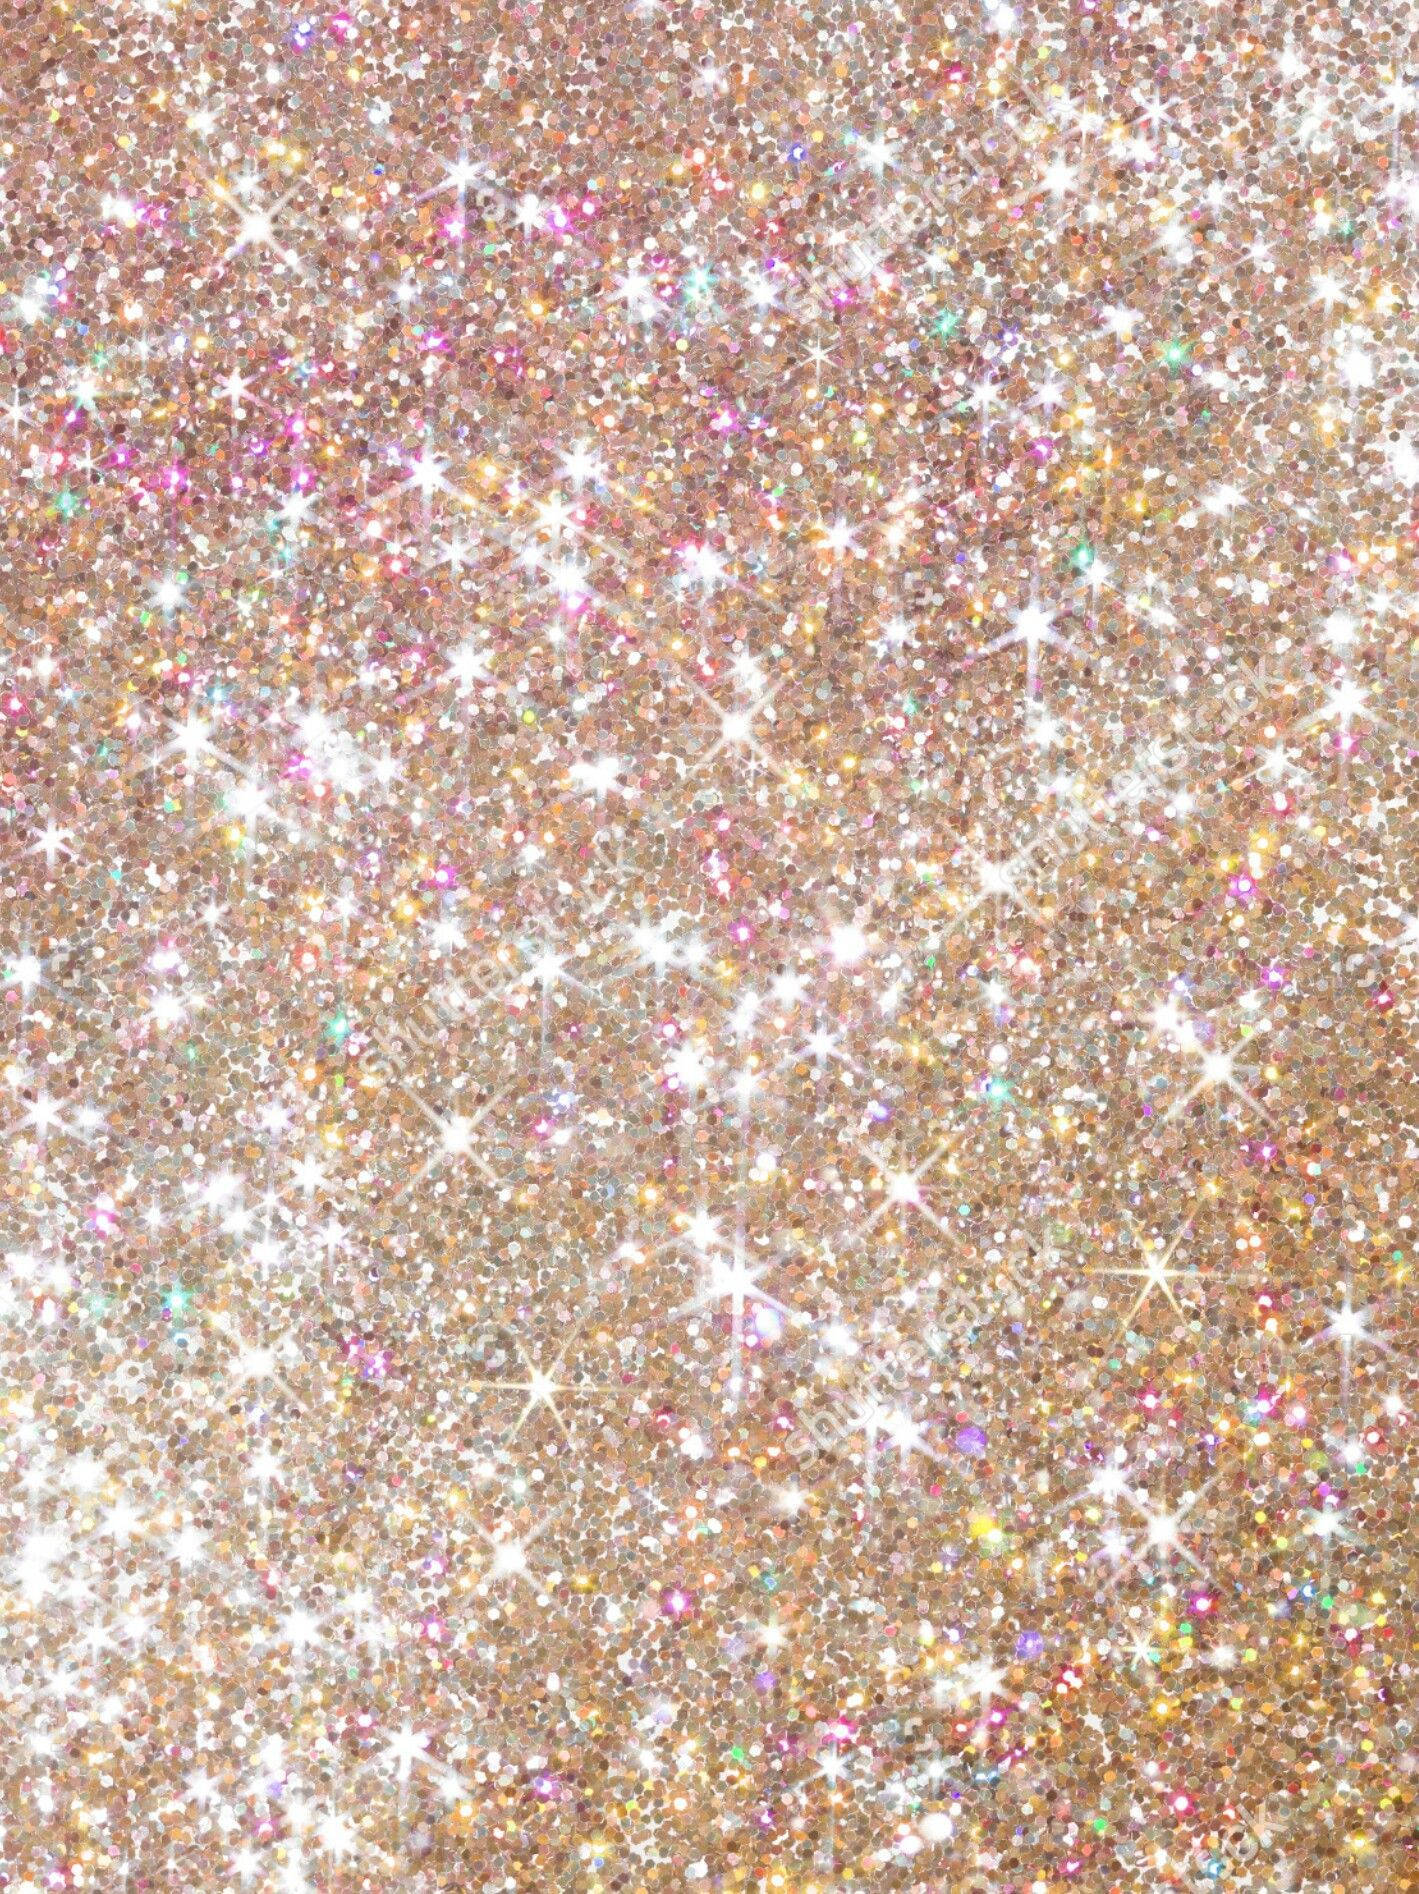 500+] Glitter Wallpapers